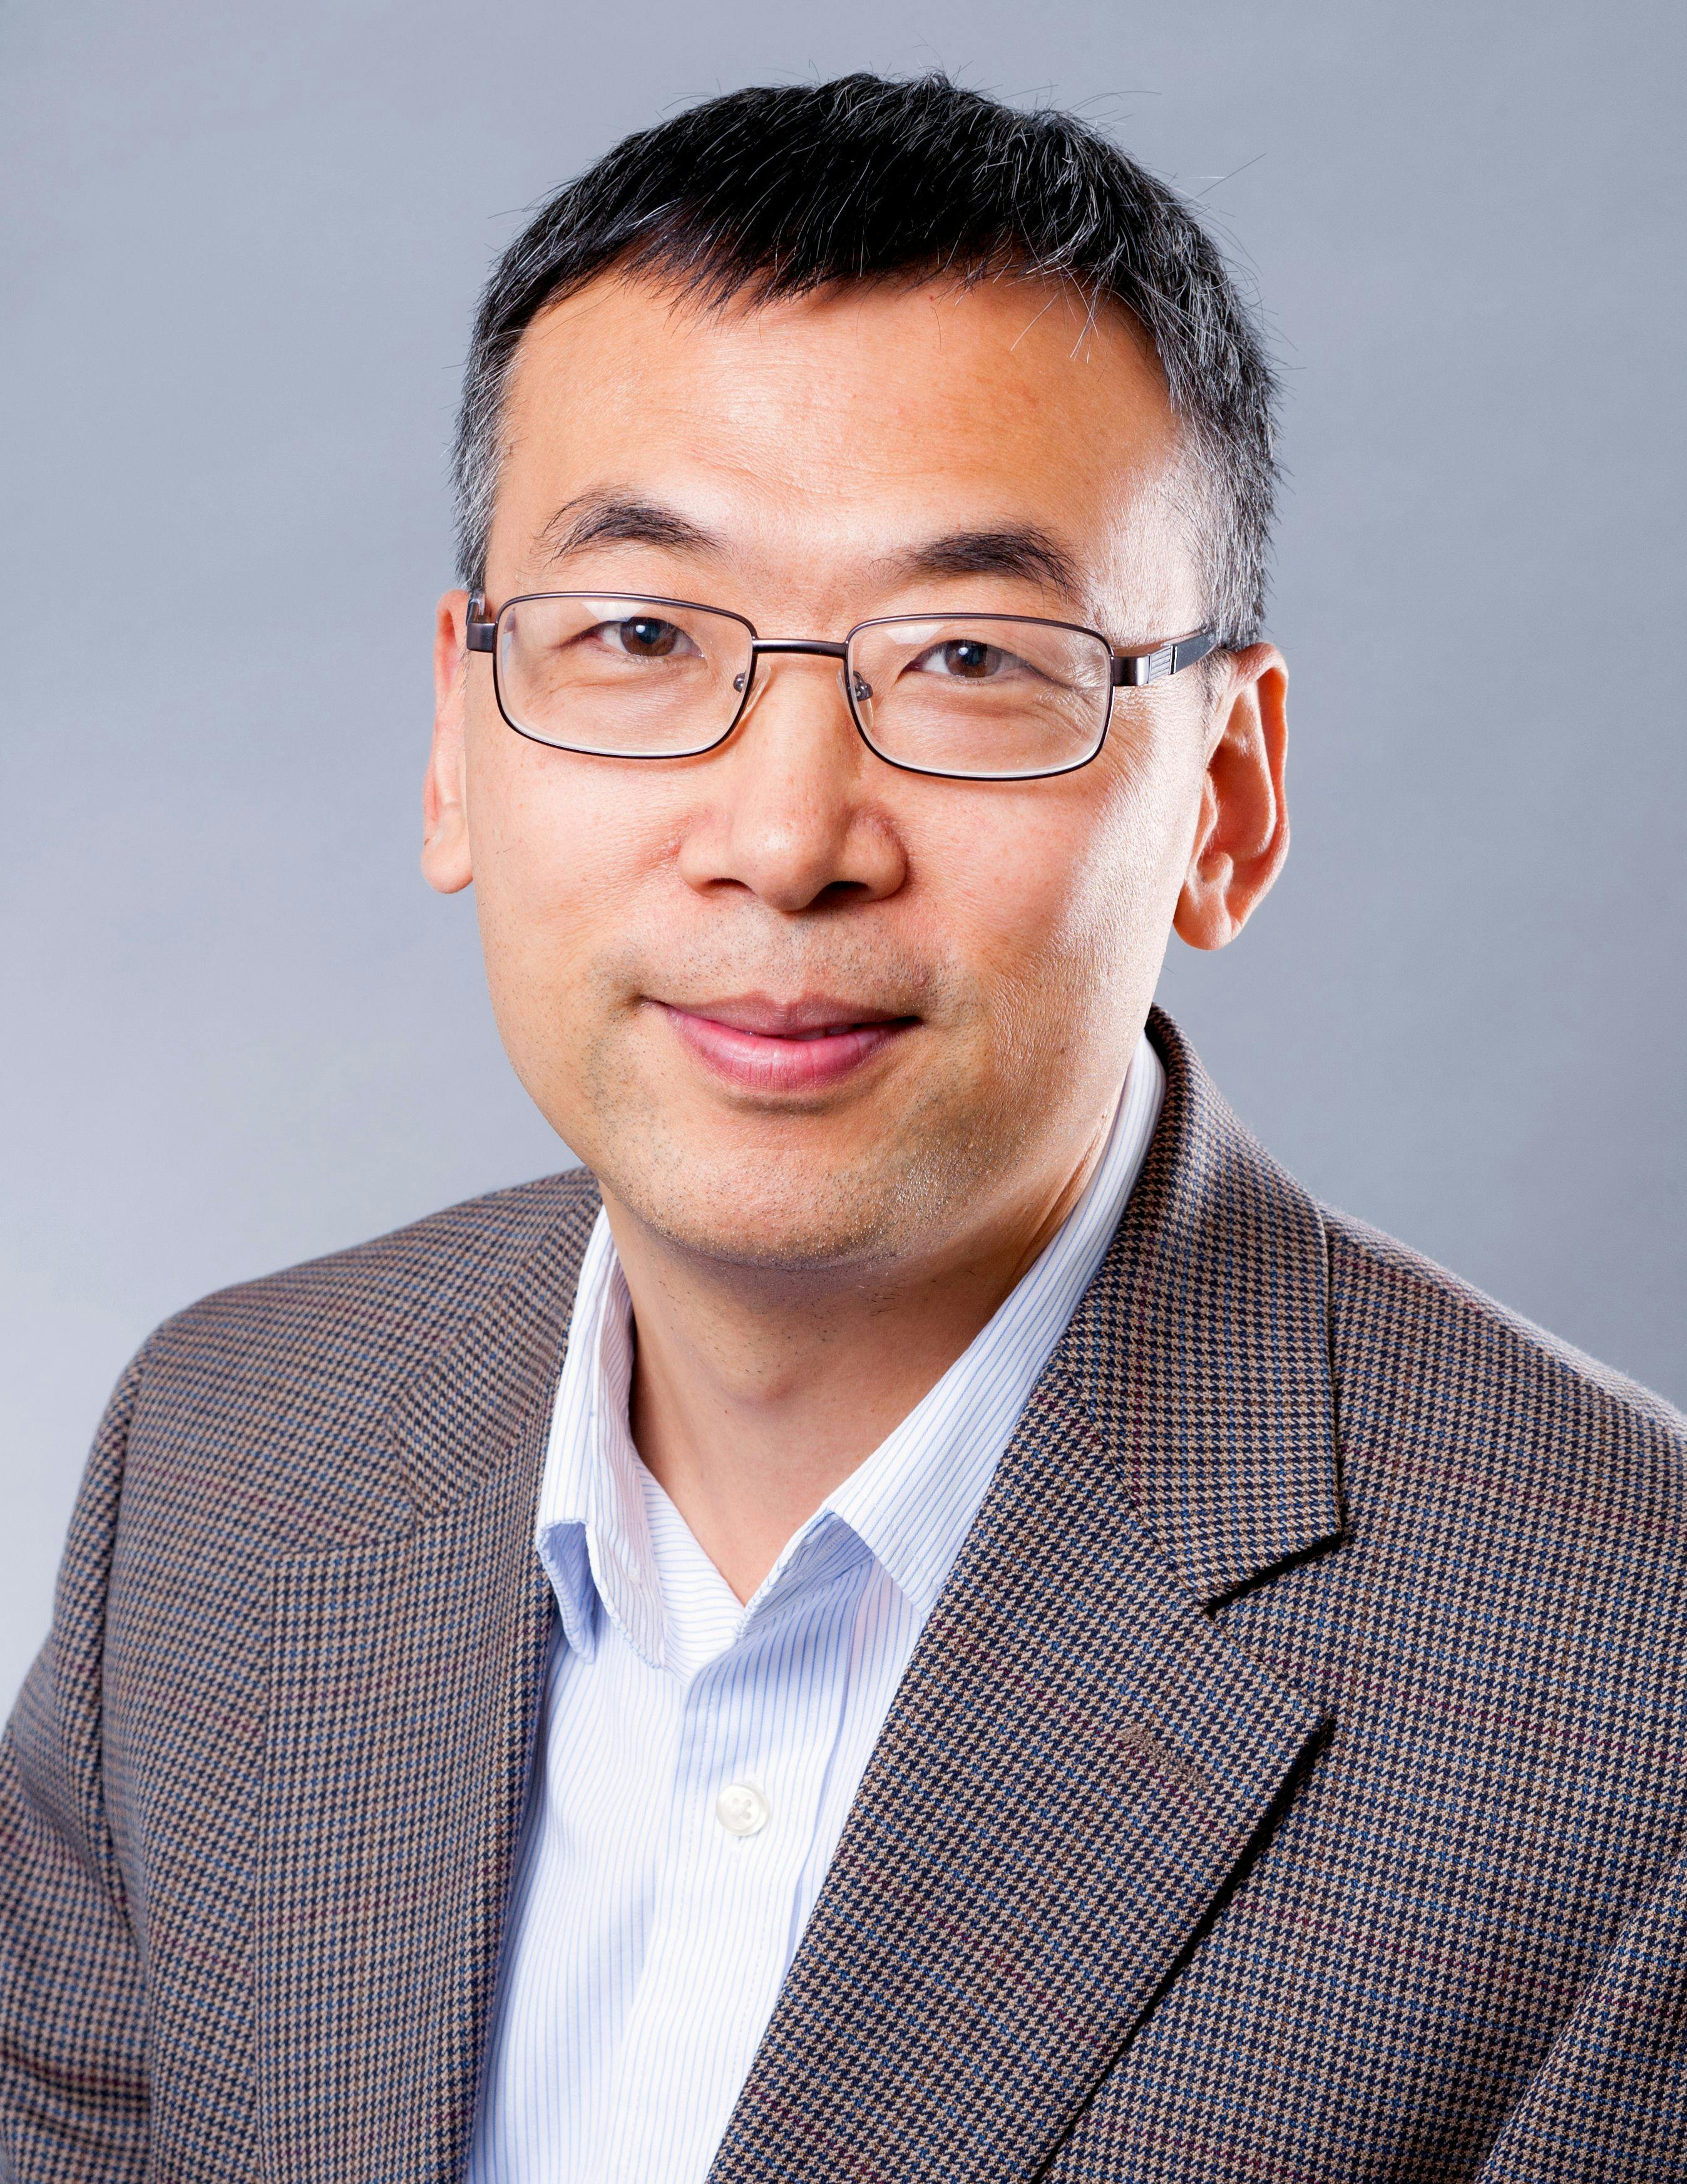 Zhaohui Su, PhD
Vice President of Biostatistics
OM1